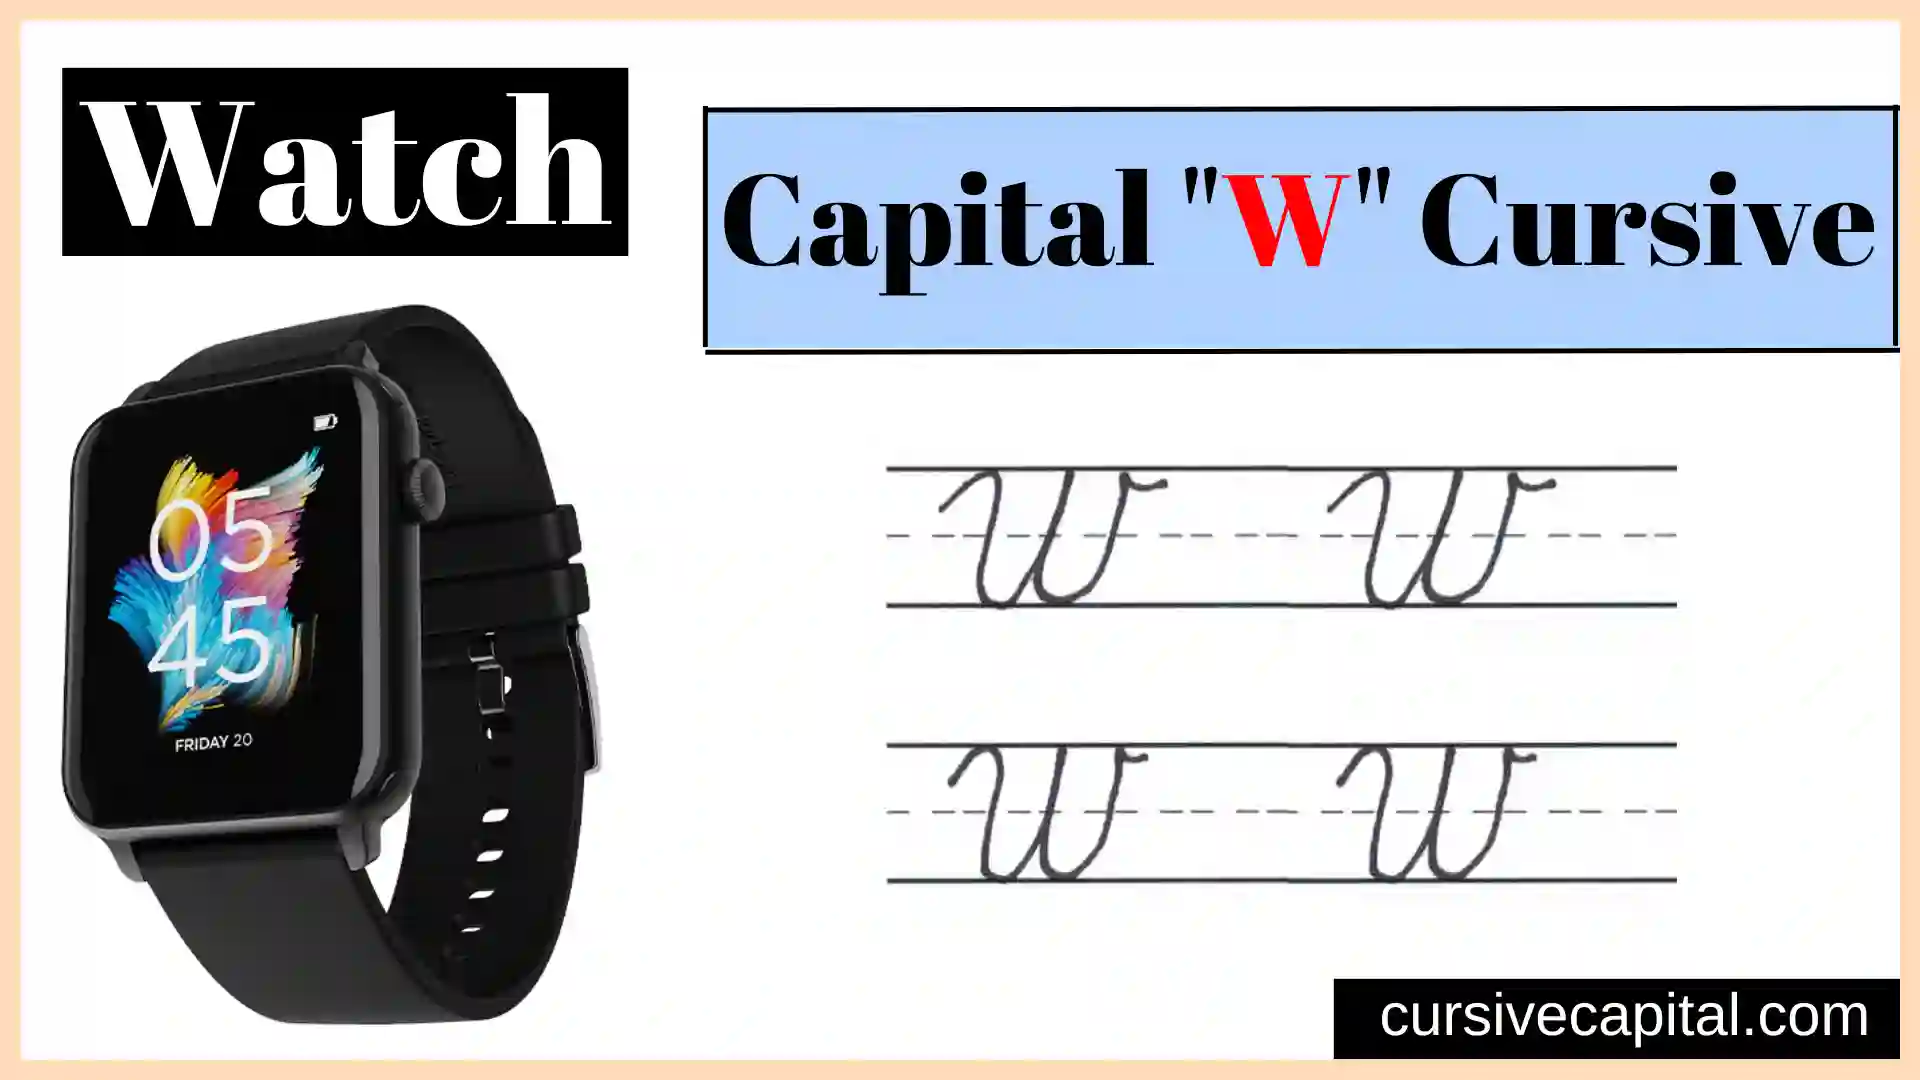 Capital W cursive